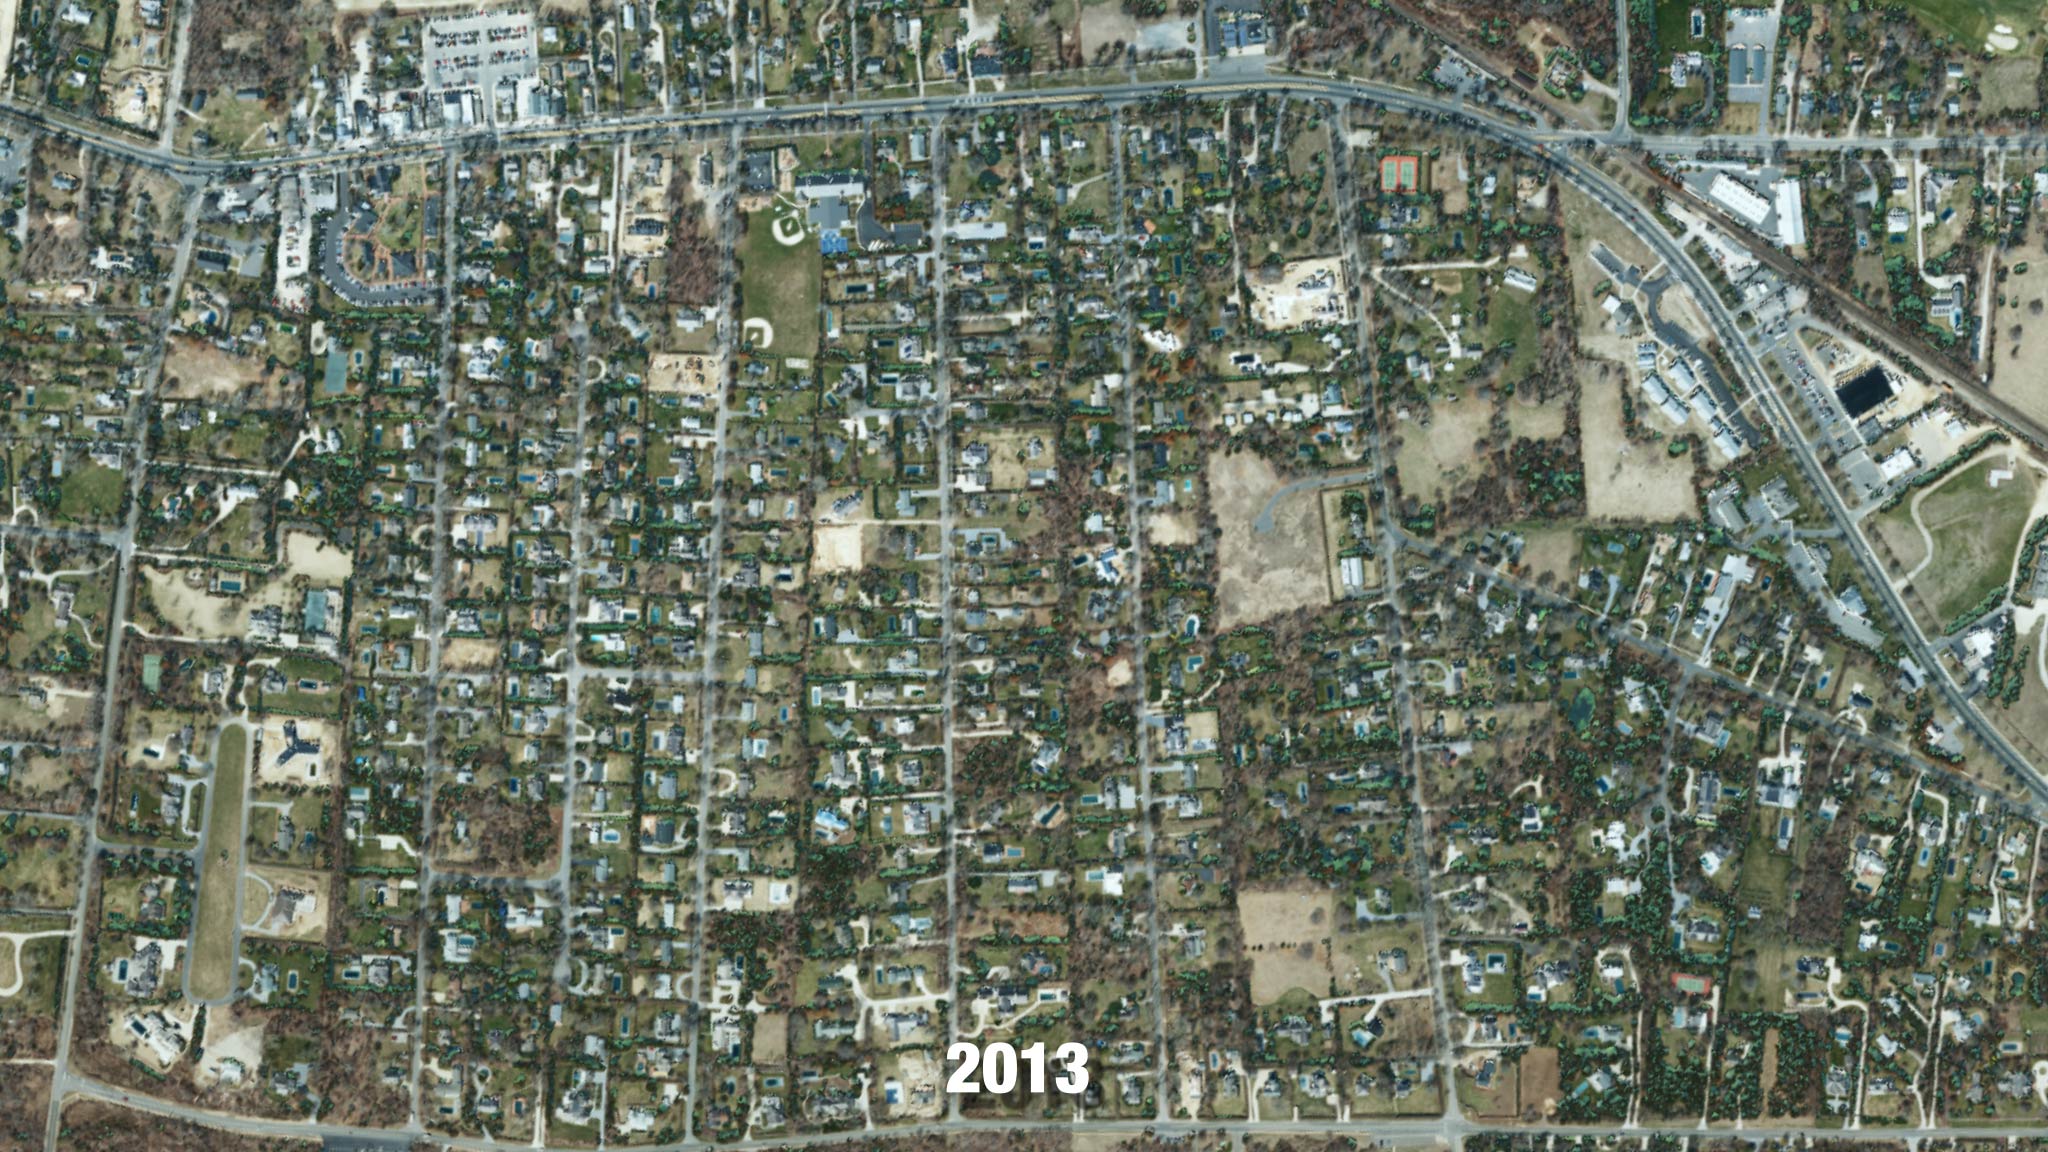 Hamptons, NY satellite image from 2013